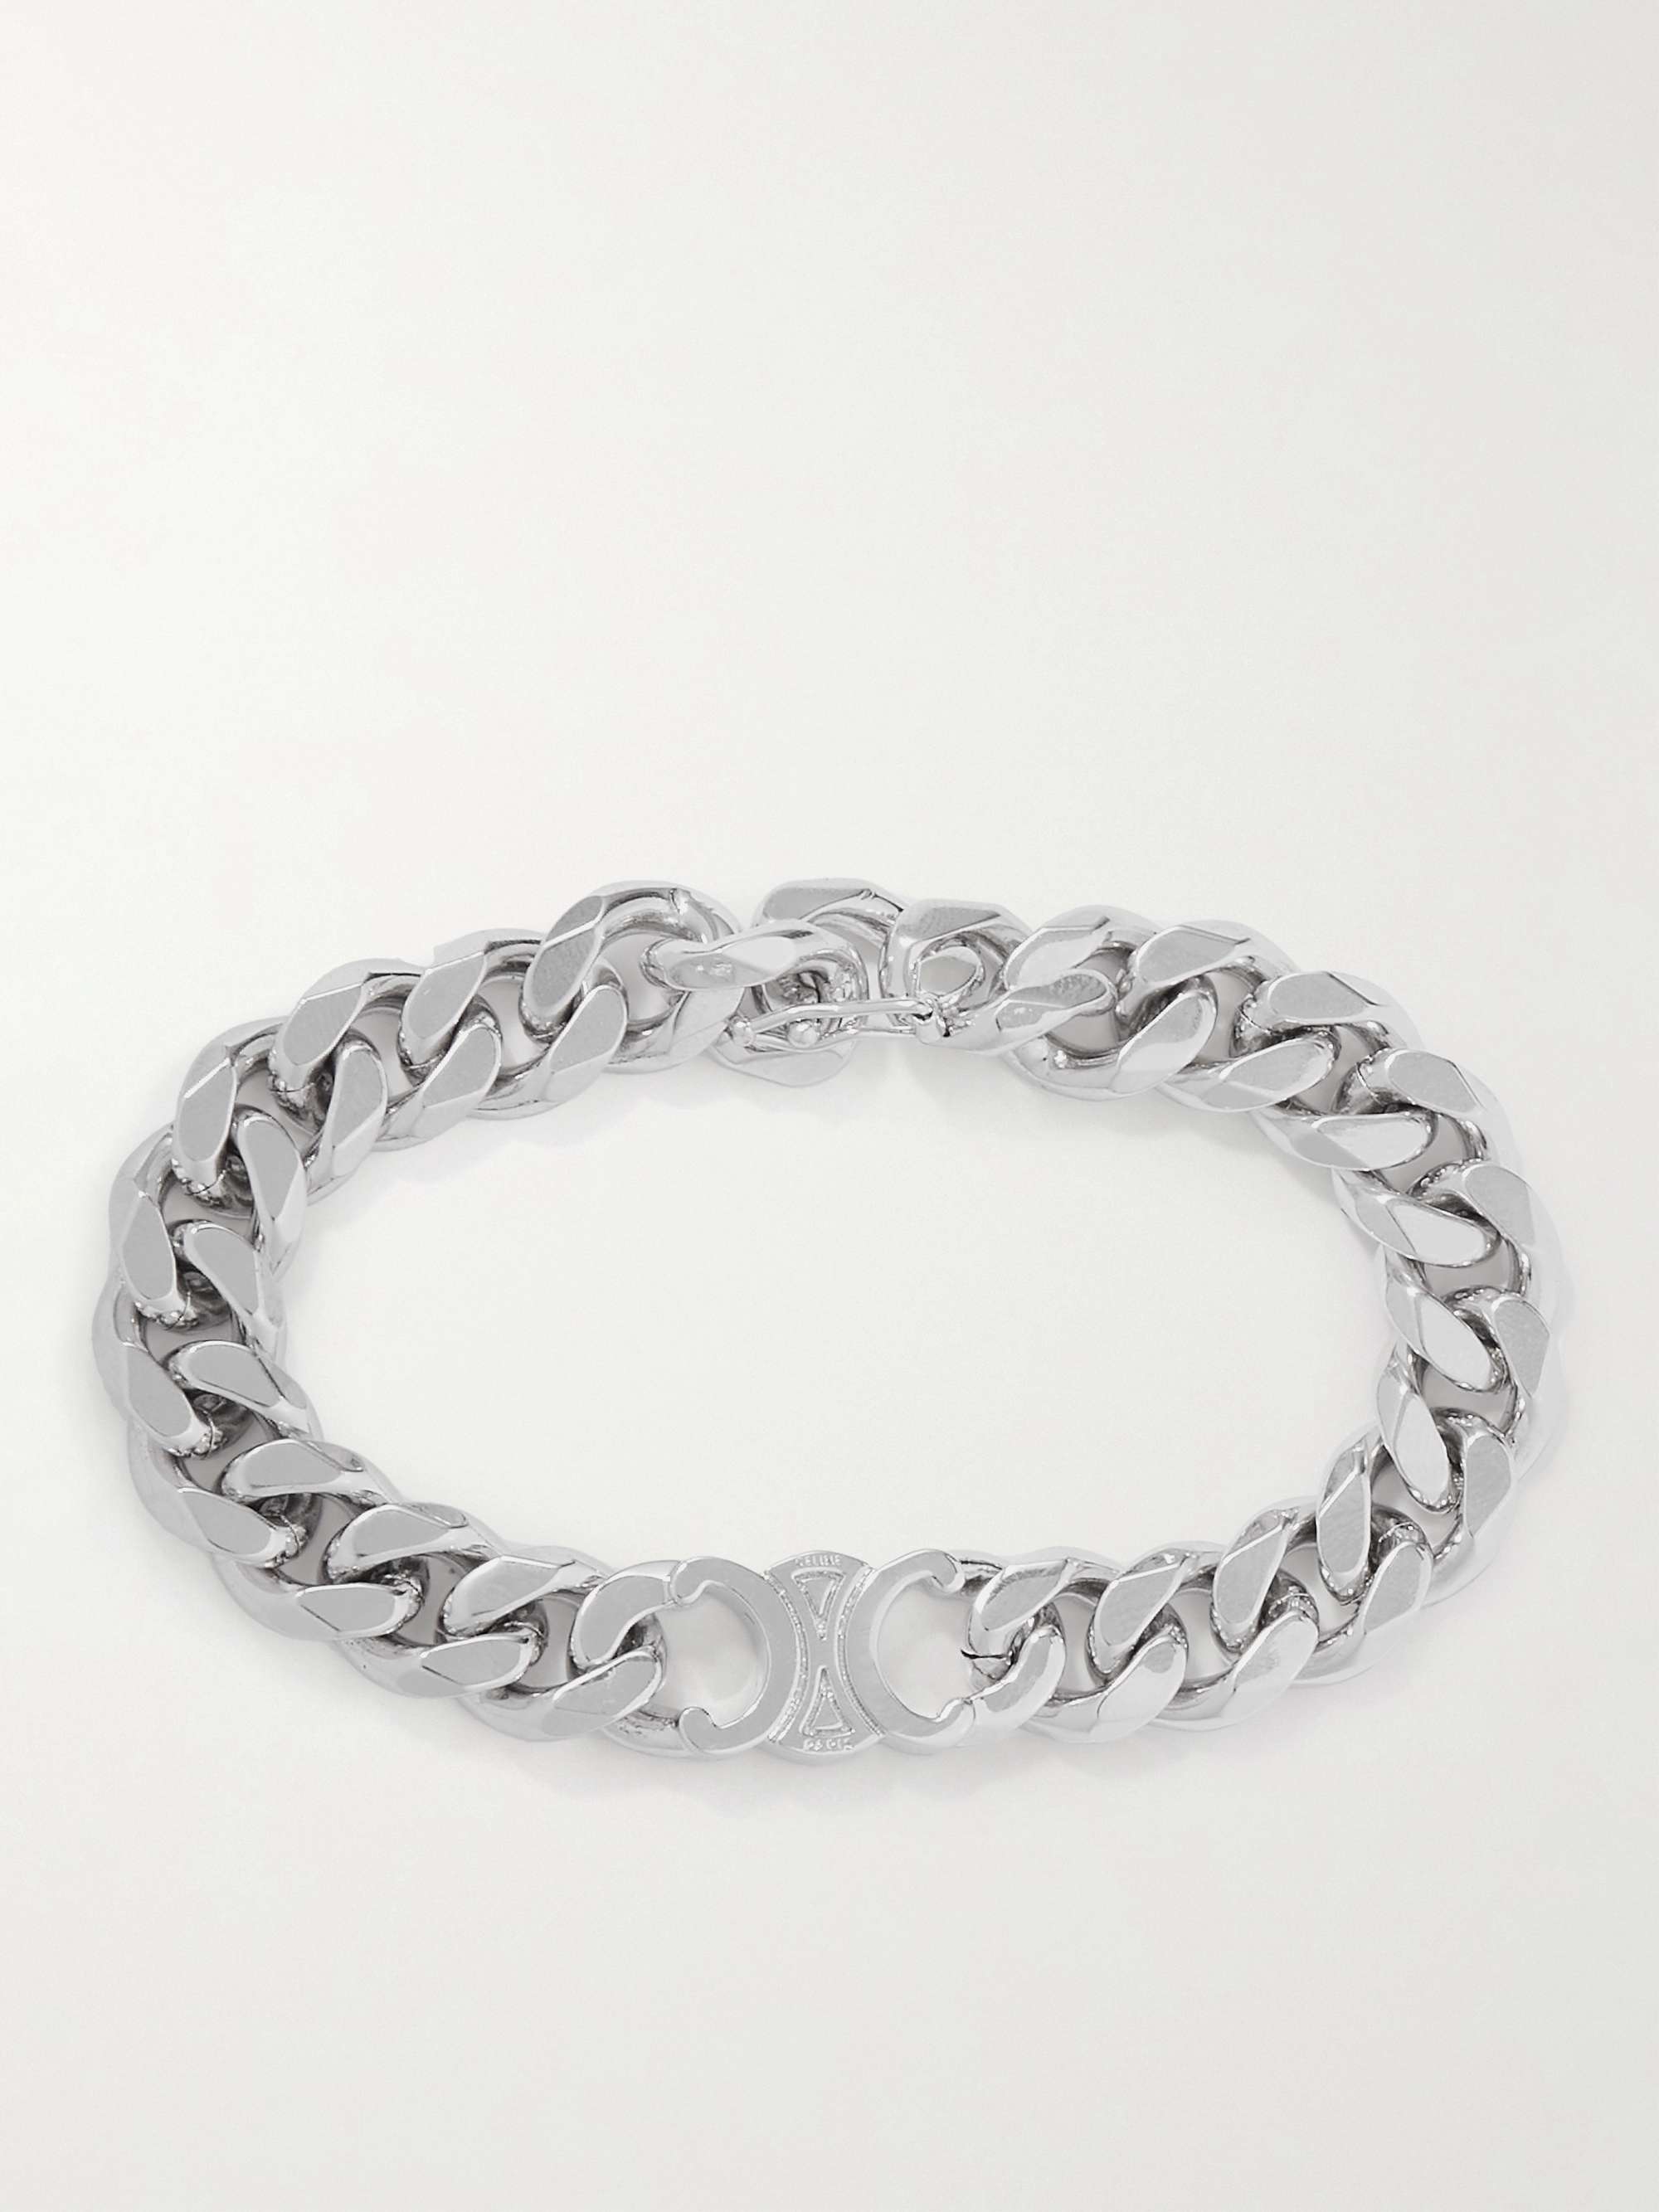 CELINE HOMME Triomphe Silver-Tone Chain Bracelet | MR PORTER